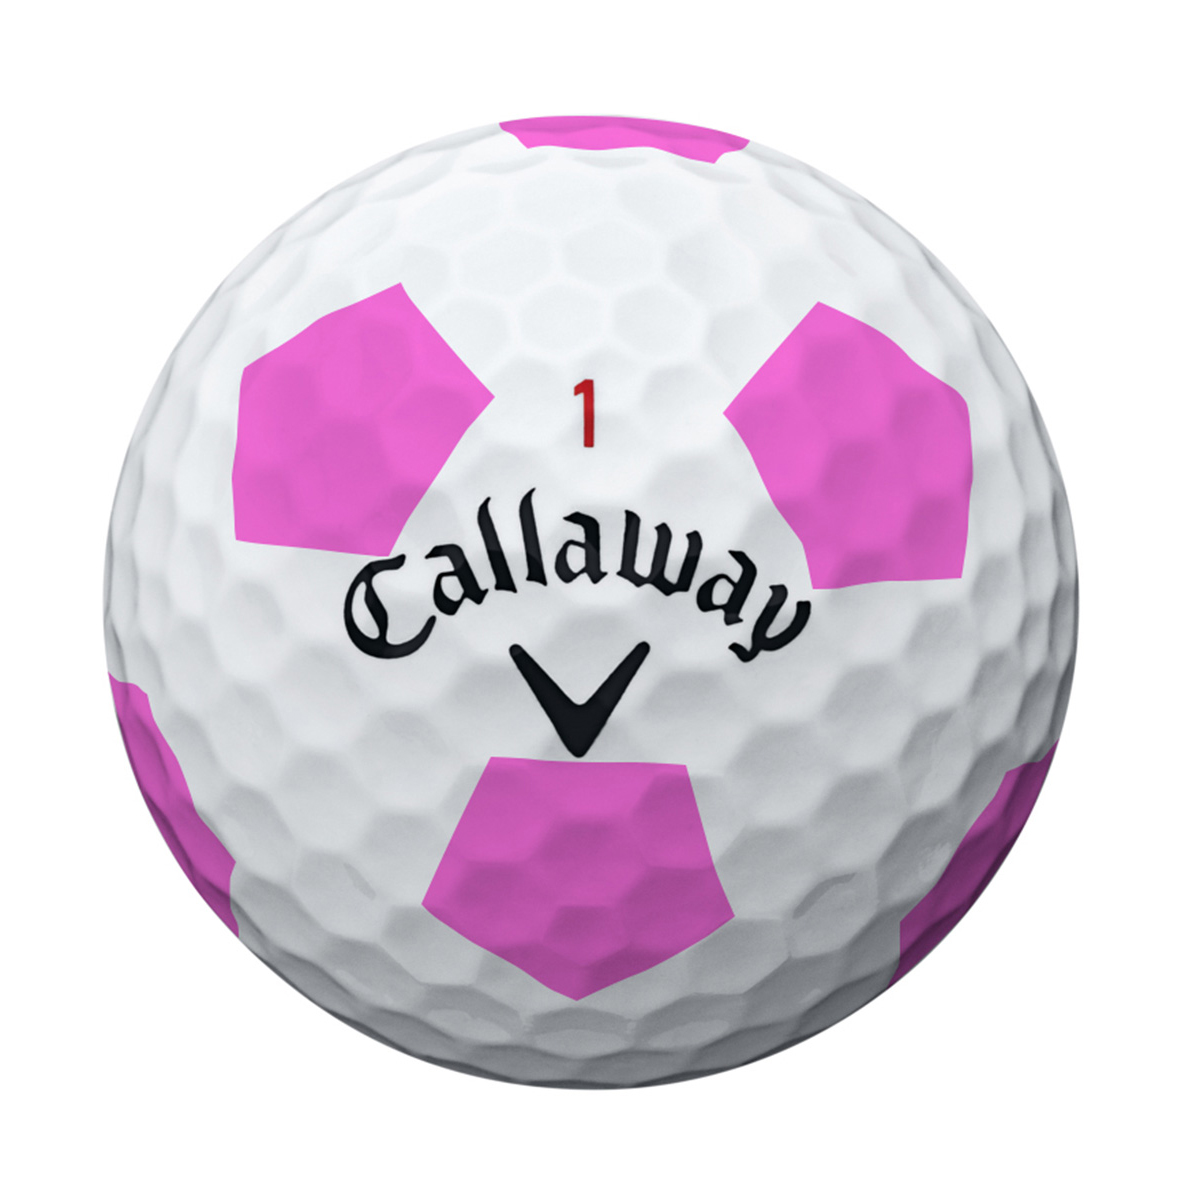 Reddit balls. Callaway мяч для гольфа. Мяч для гольфа PNG. Суфле мячики гольф. Callaway Golf PNG.